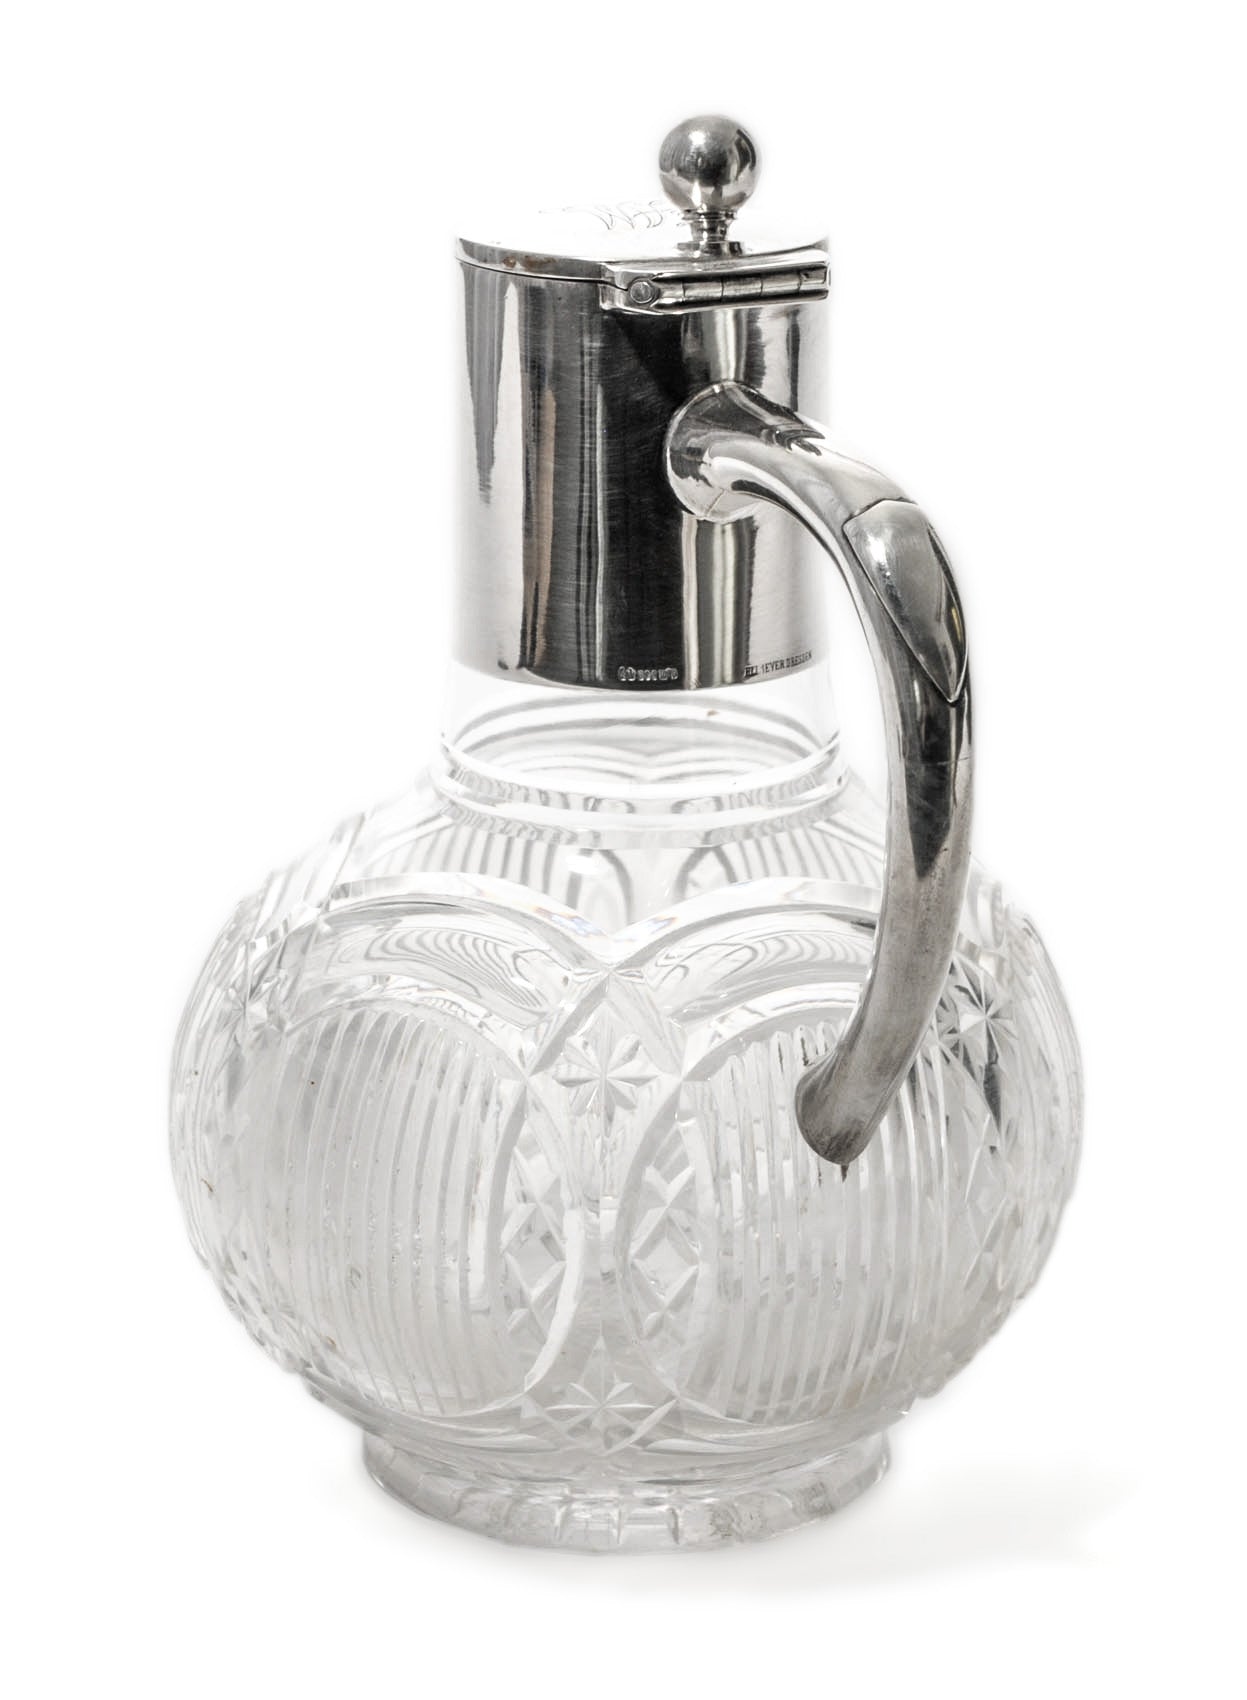 Antique German Elimeyer Dresden 800 Silver & Cut Glass Schnapps Decanter c1900 (Code 9813)